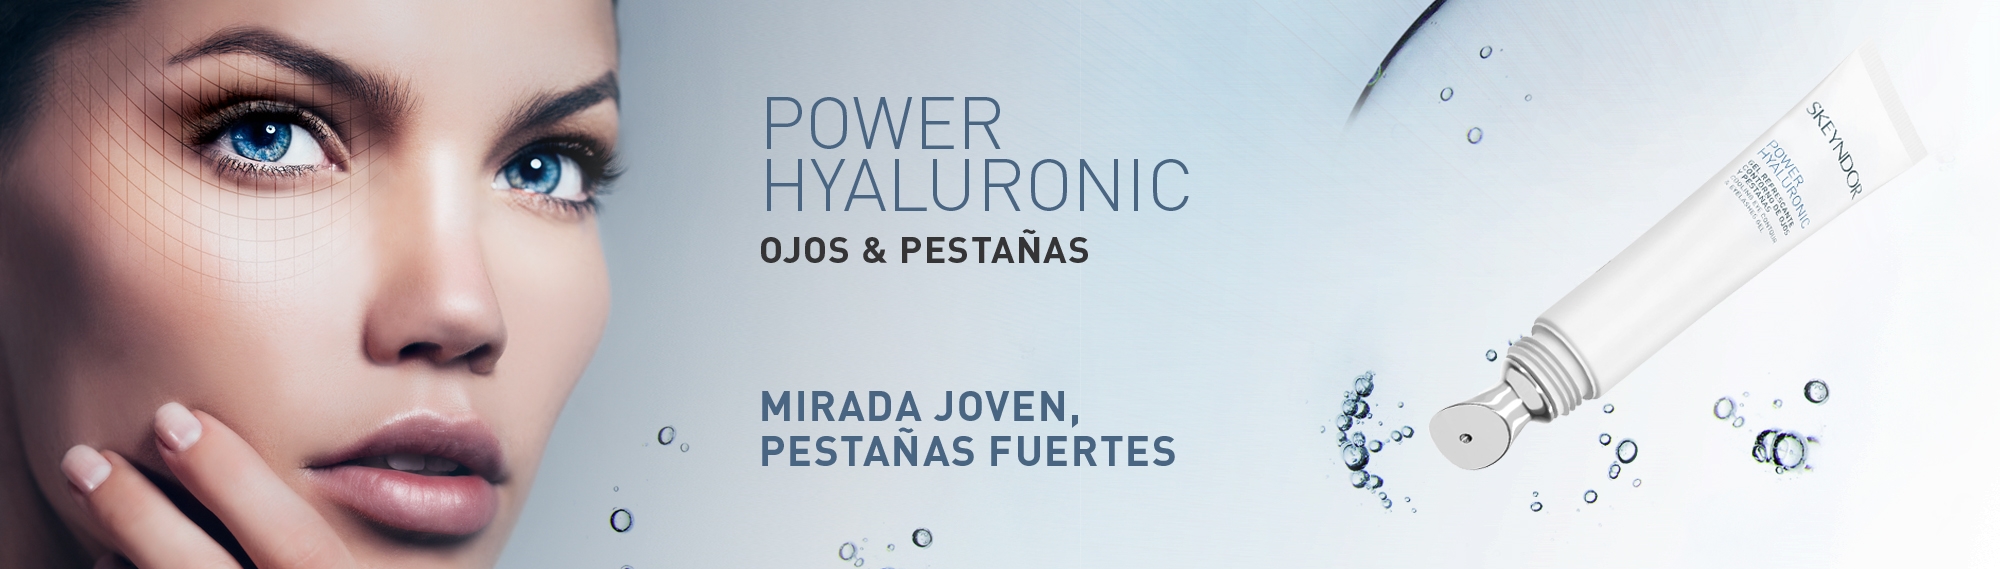 power hyaluronic